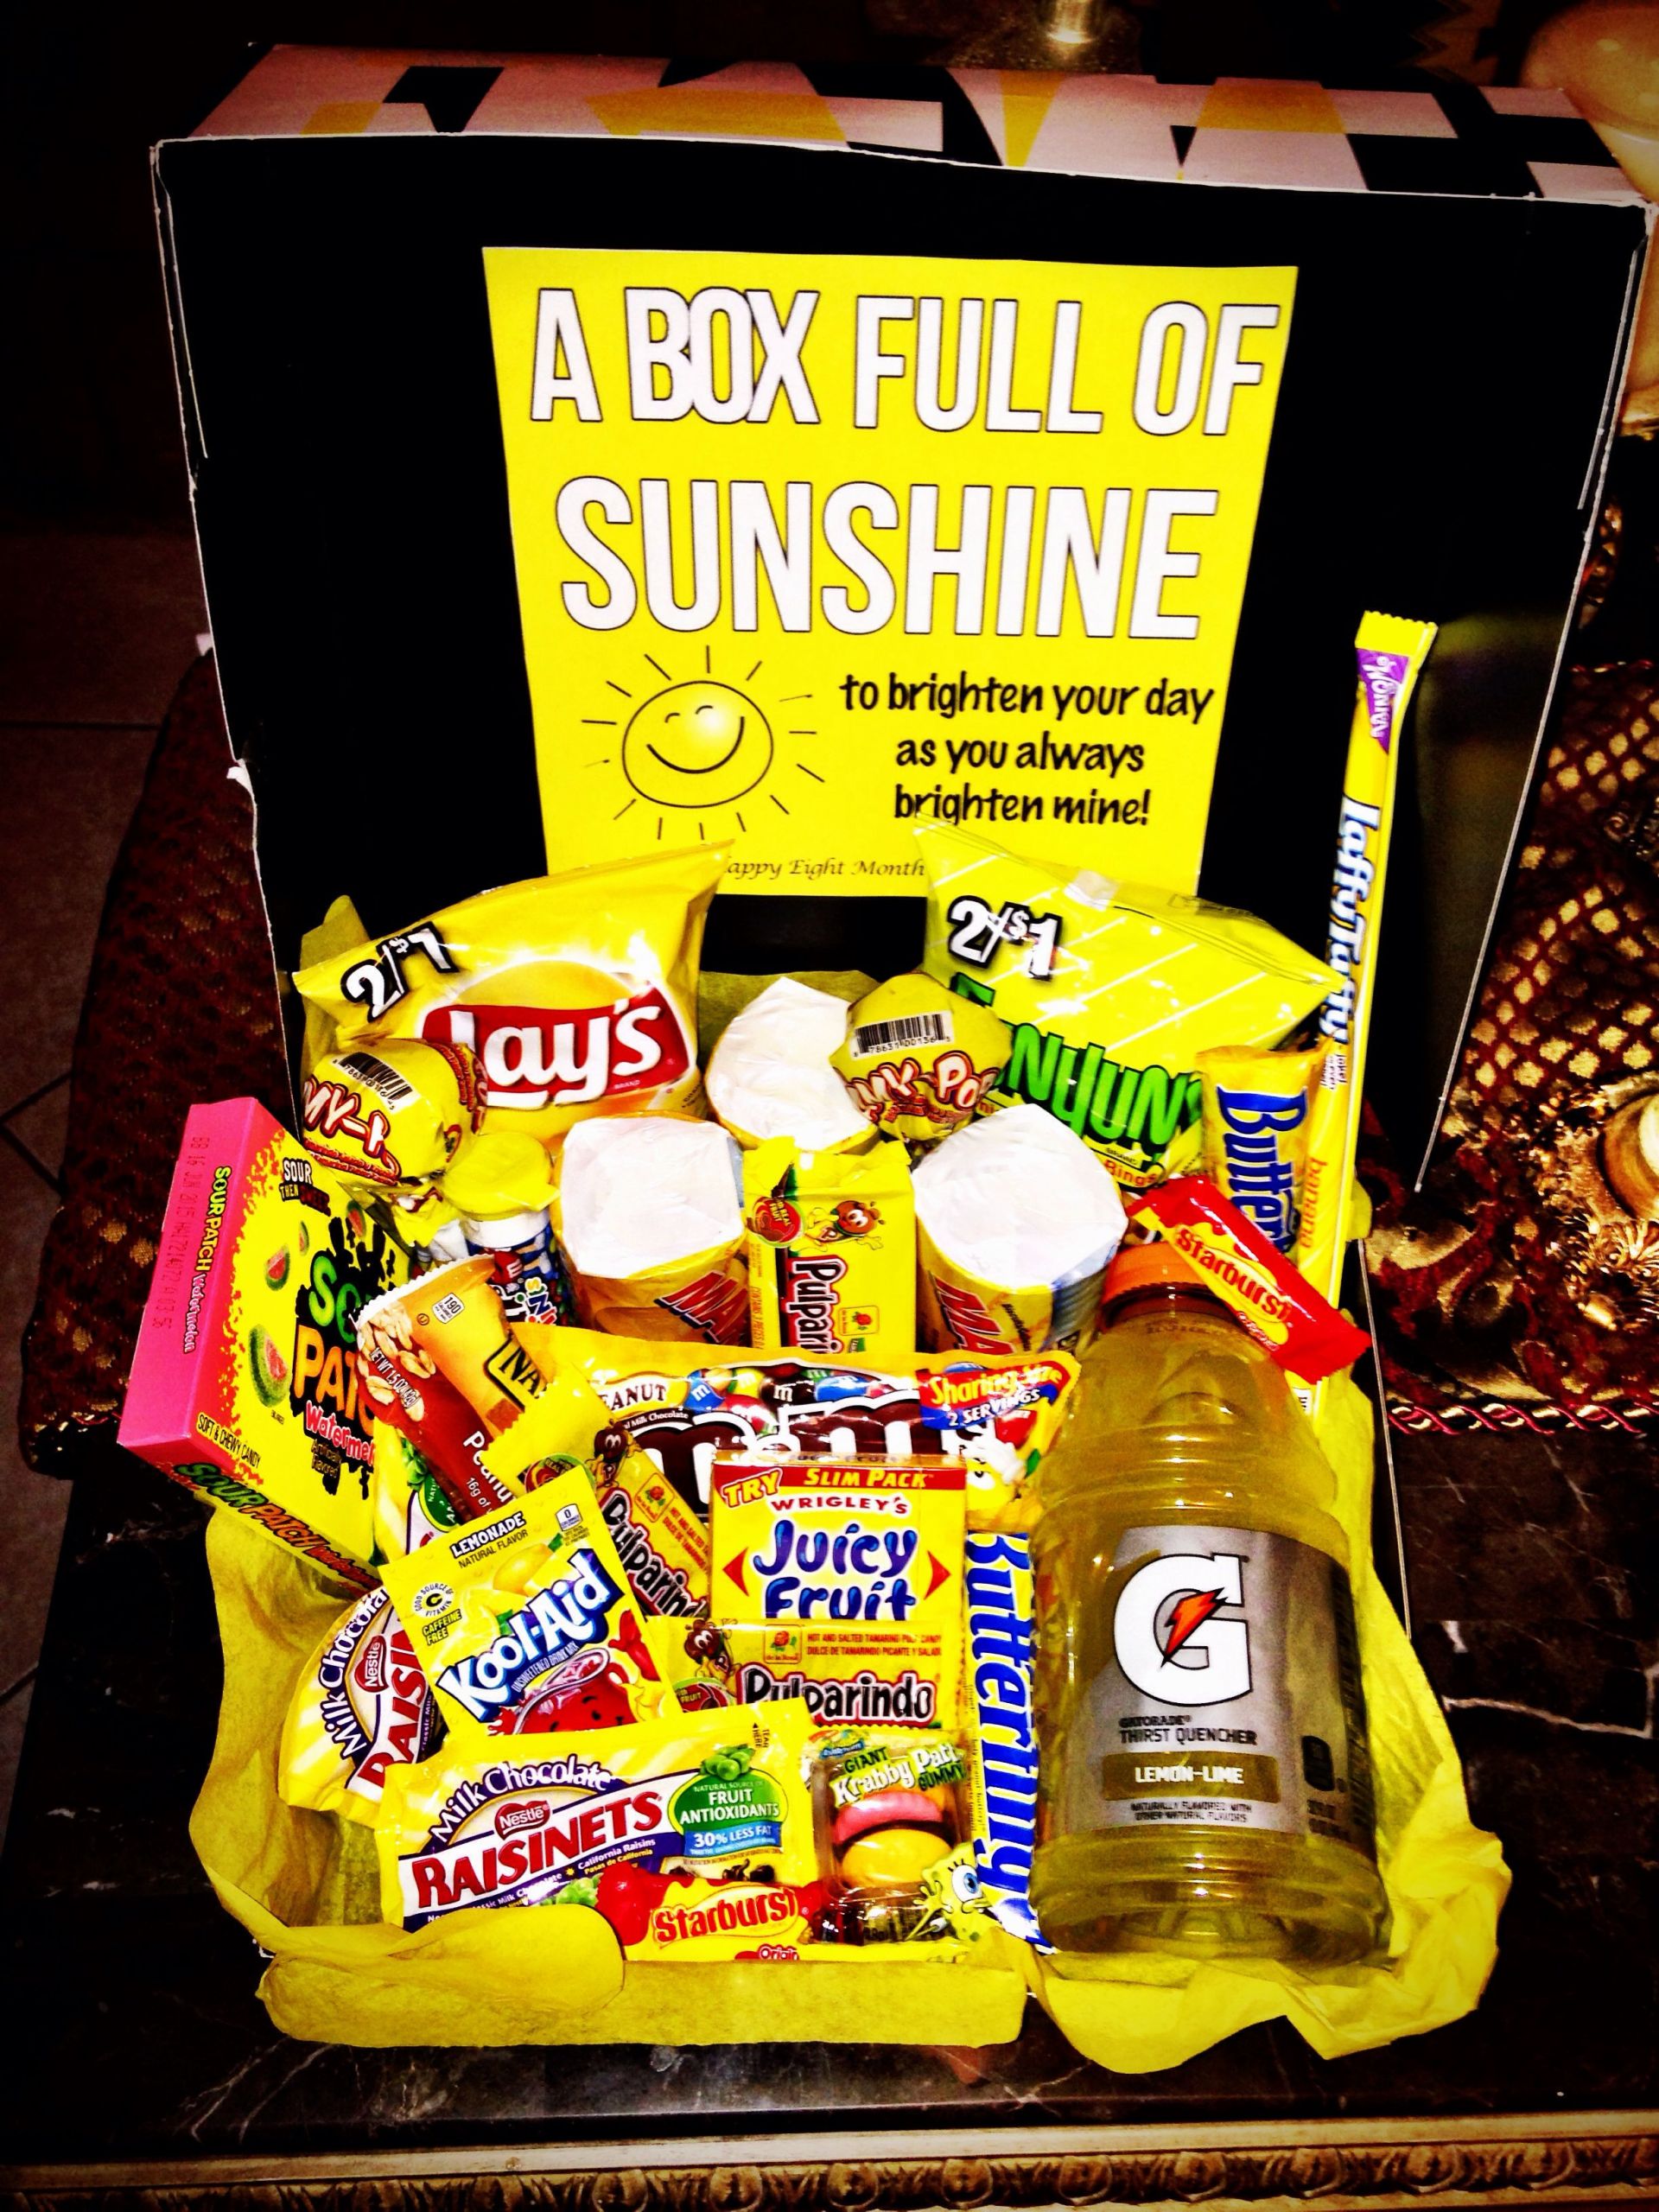 Small Gift Ideas For Boyfriend
 "Box Full Sunshine" Gift For The Boyfriend